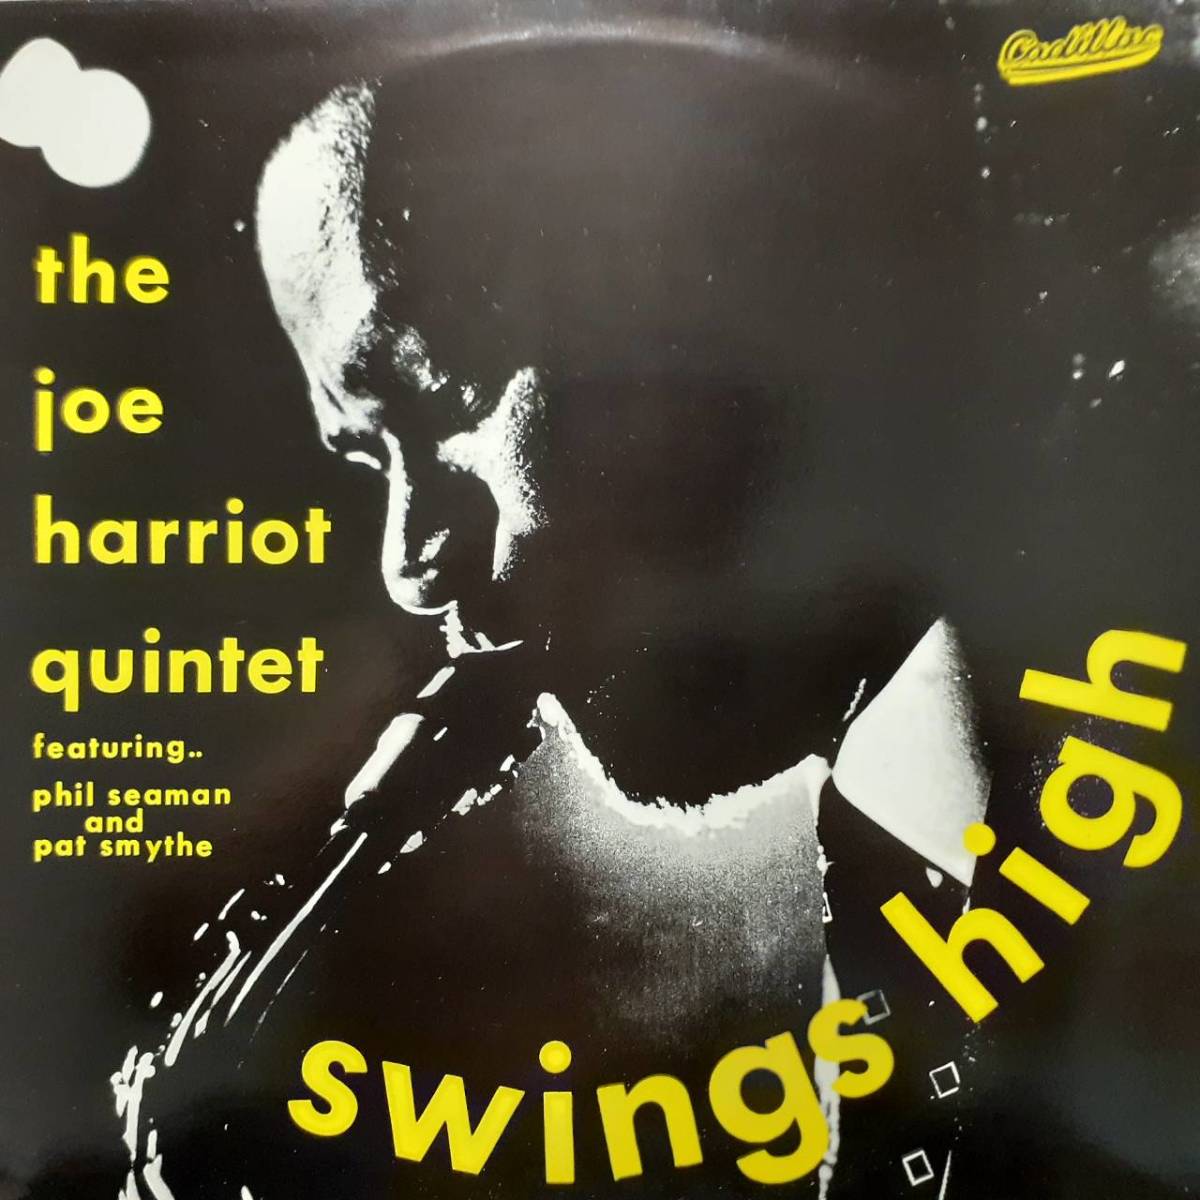 o Rige 200 доллар супер! Британия Cadilac запись LP!Joe Harriott Quintet / Swings High 70 год произведение. 89 год запись SGC/MLP12-150 Phil Seaman,Coleridge Goode SKA